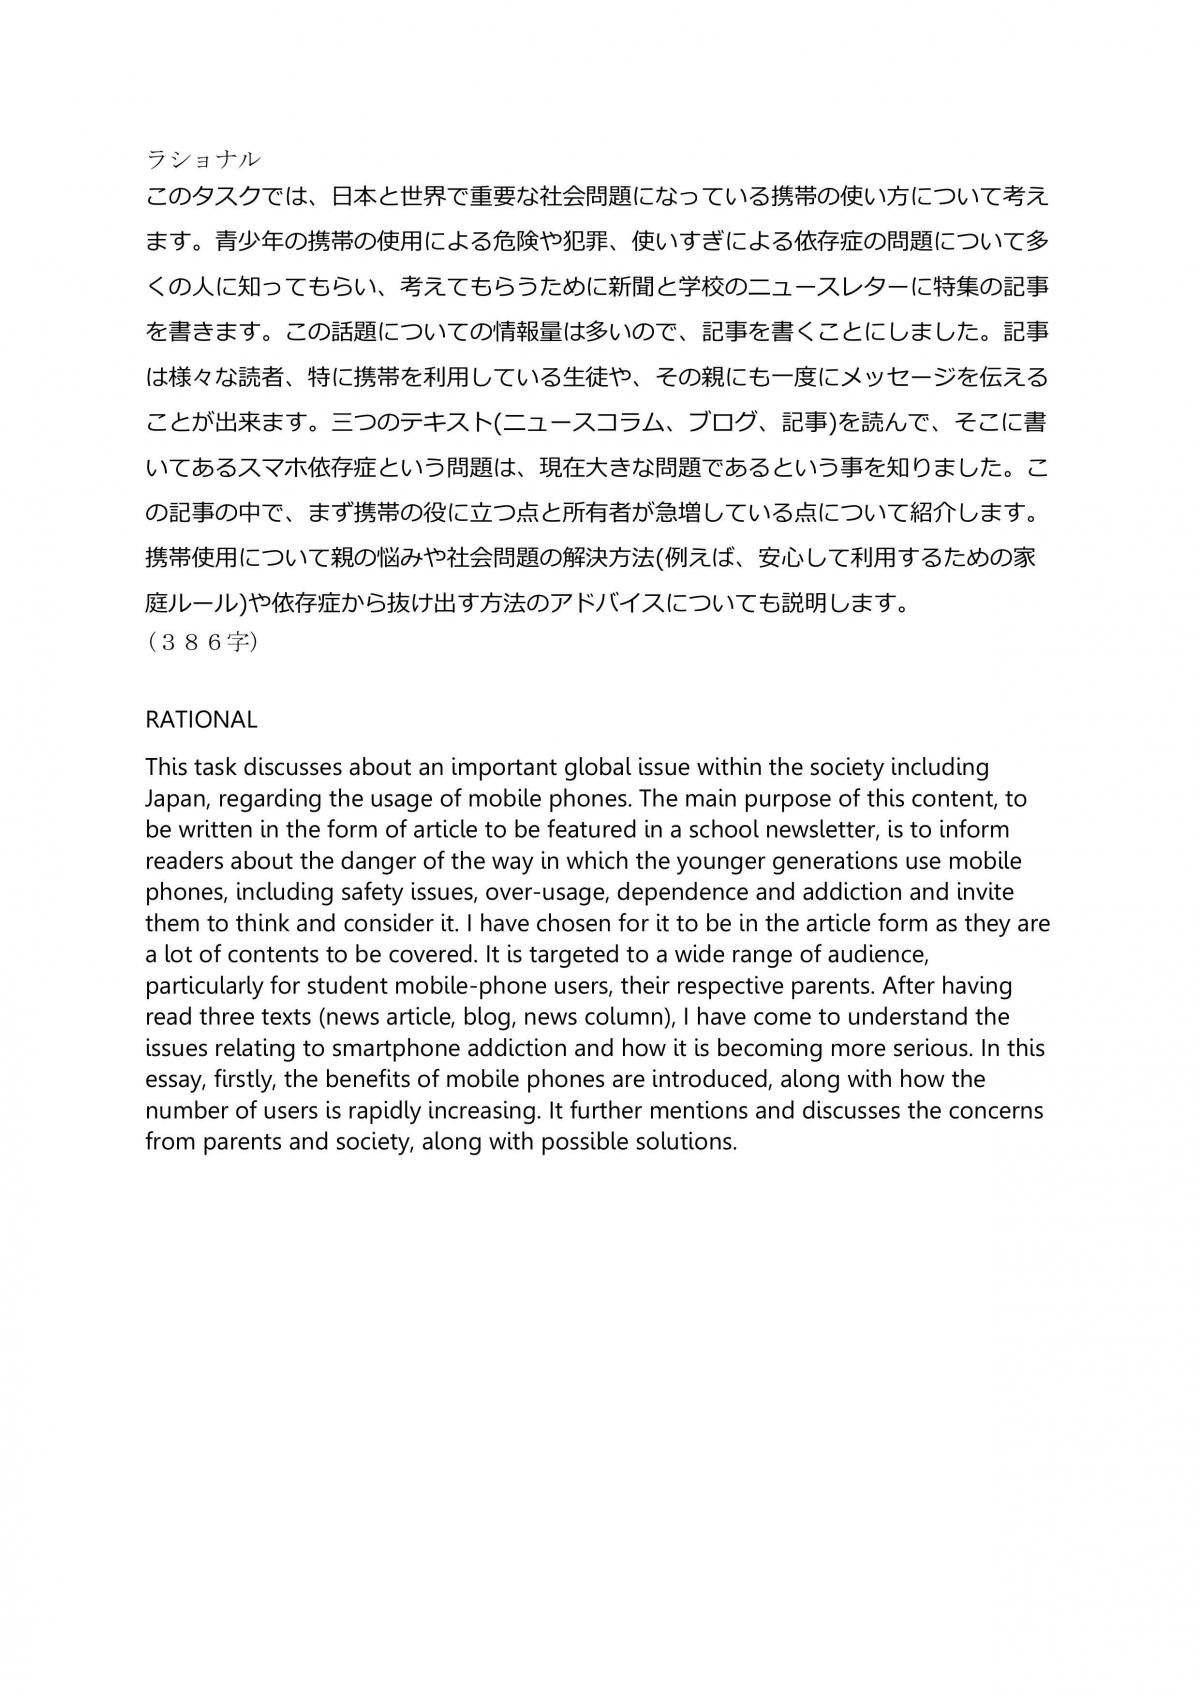 essay in japan